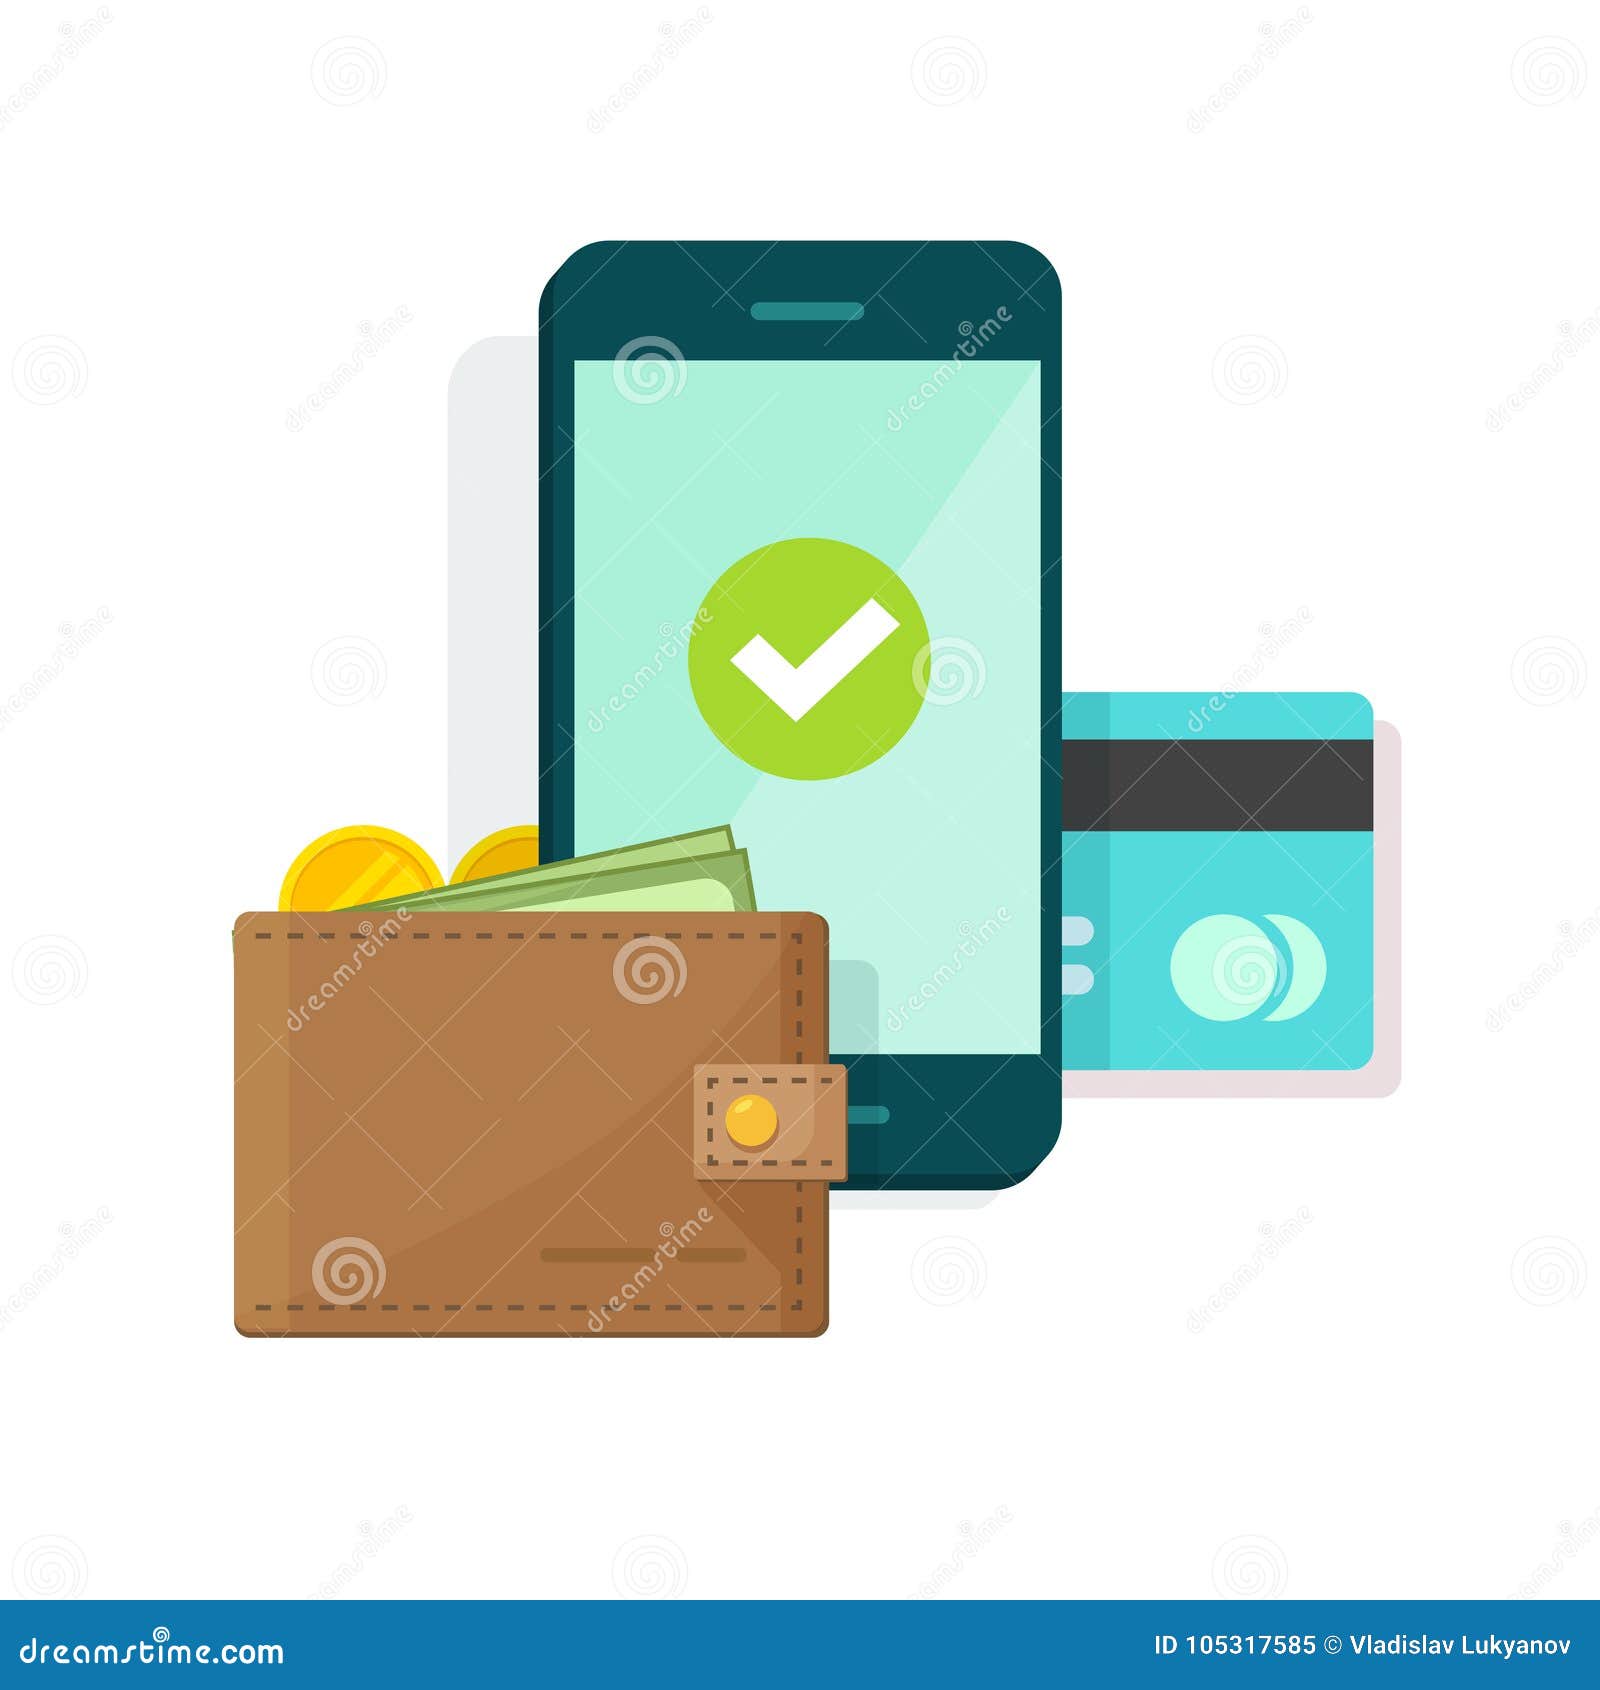 digital mobile wallet   icon